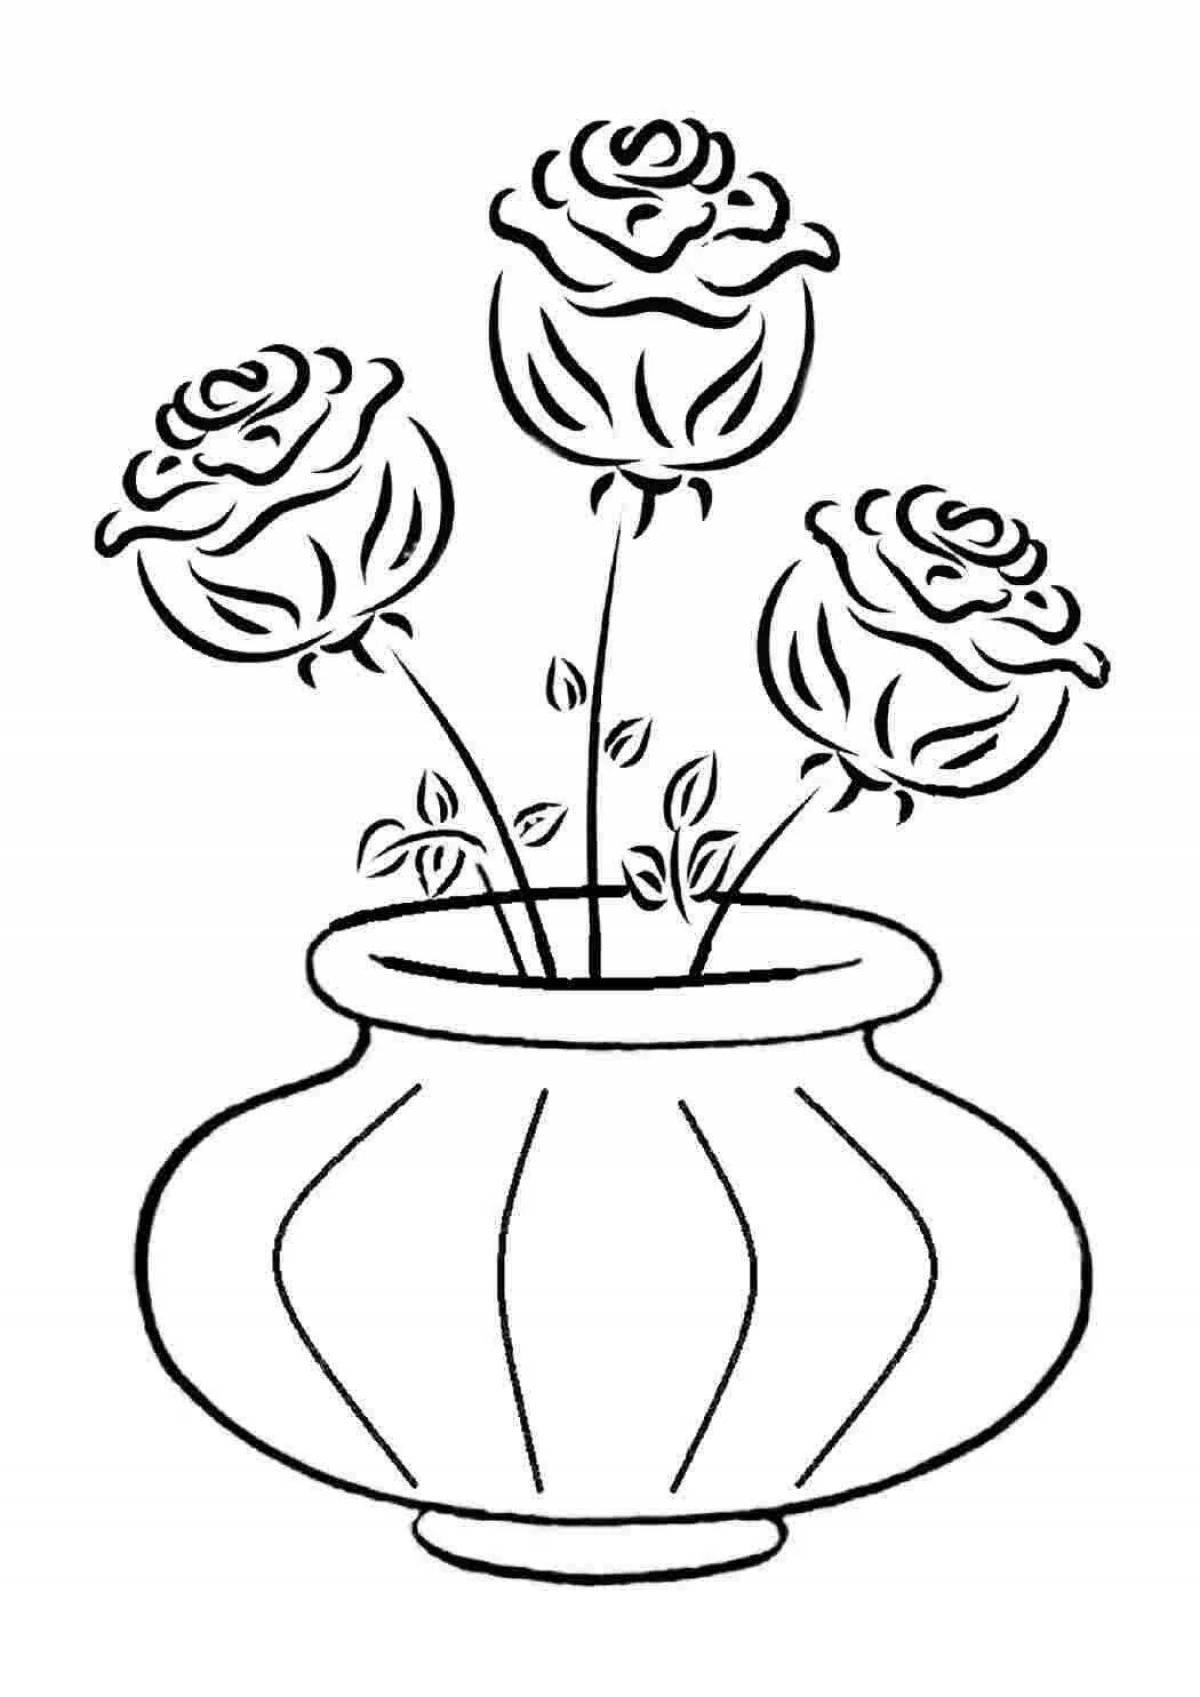 Rose flowers in a vase #2